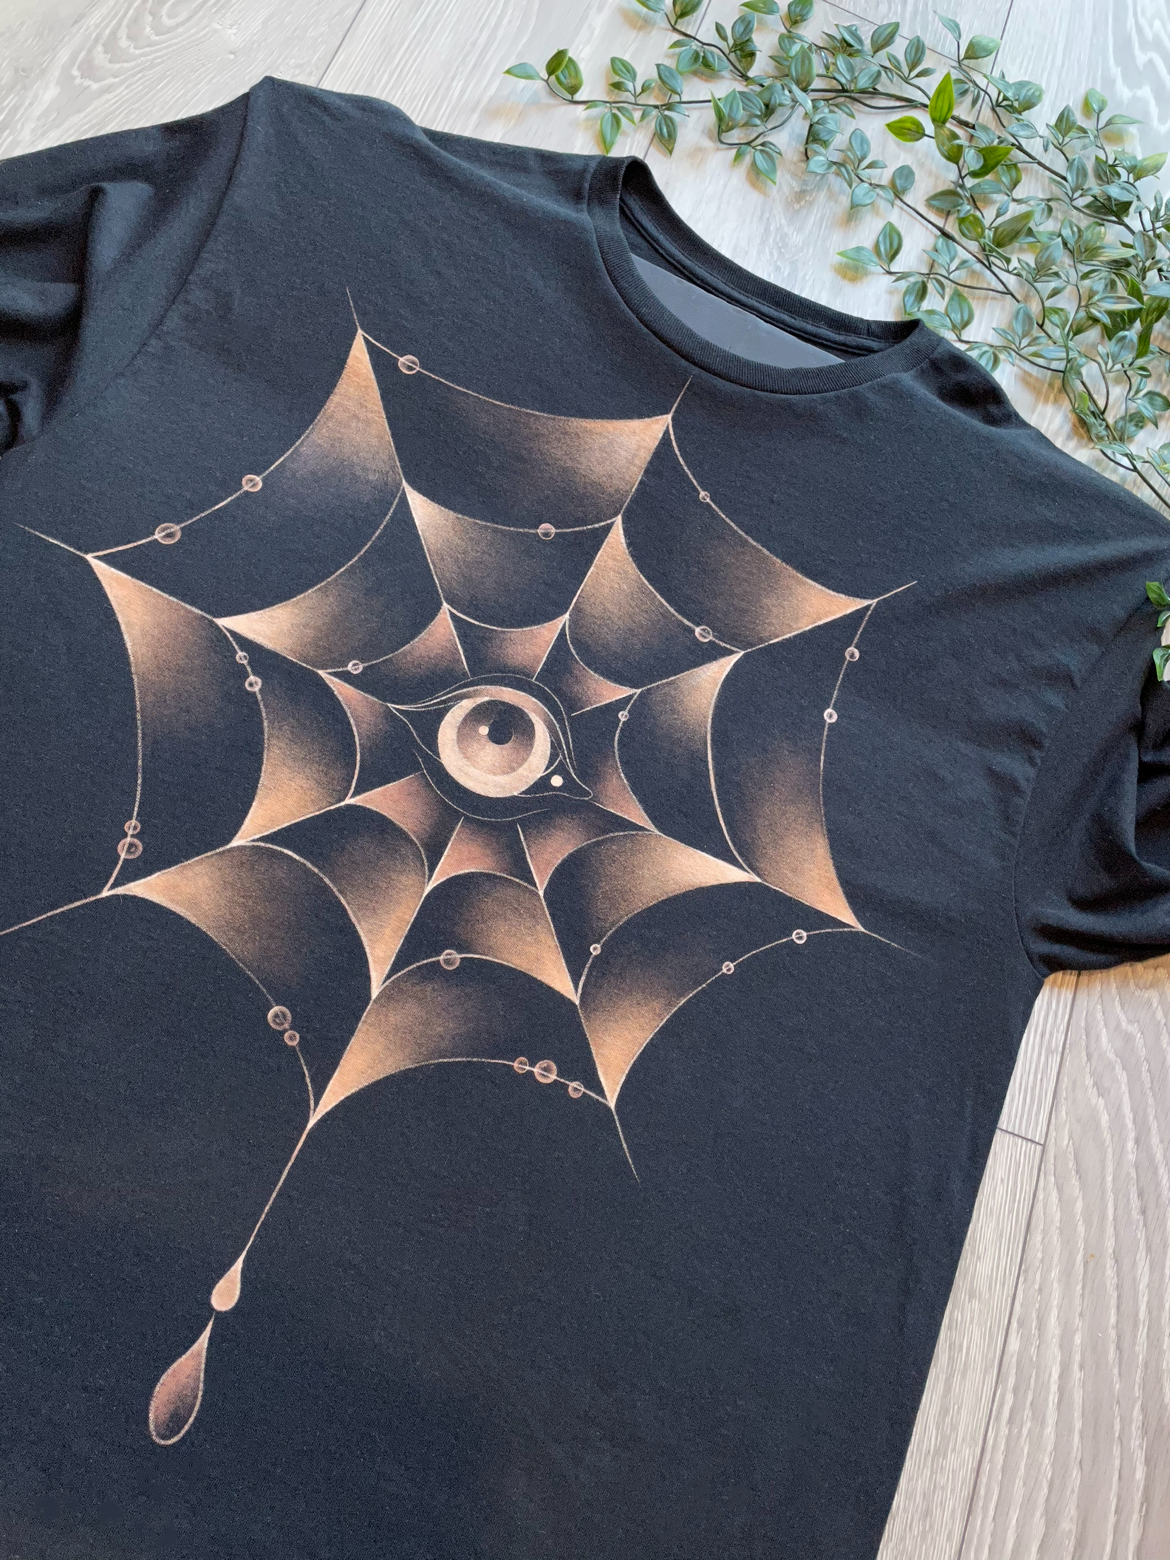 Web of Eyes 1 of 1 - long sleeve T-shirt size XL